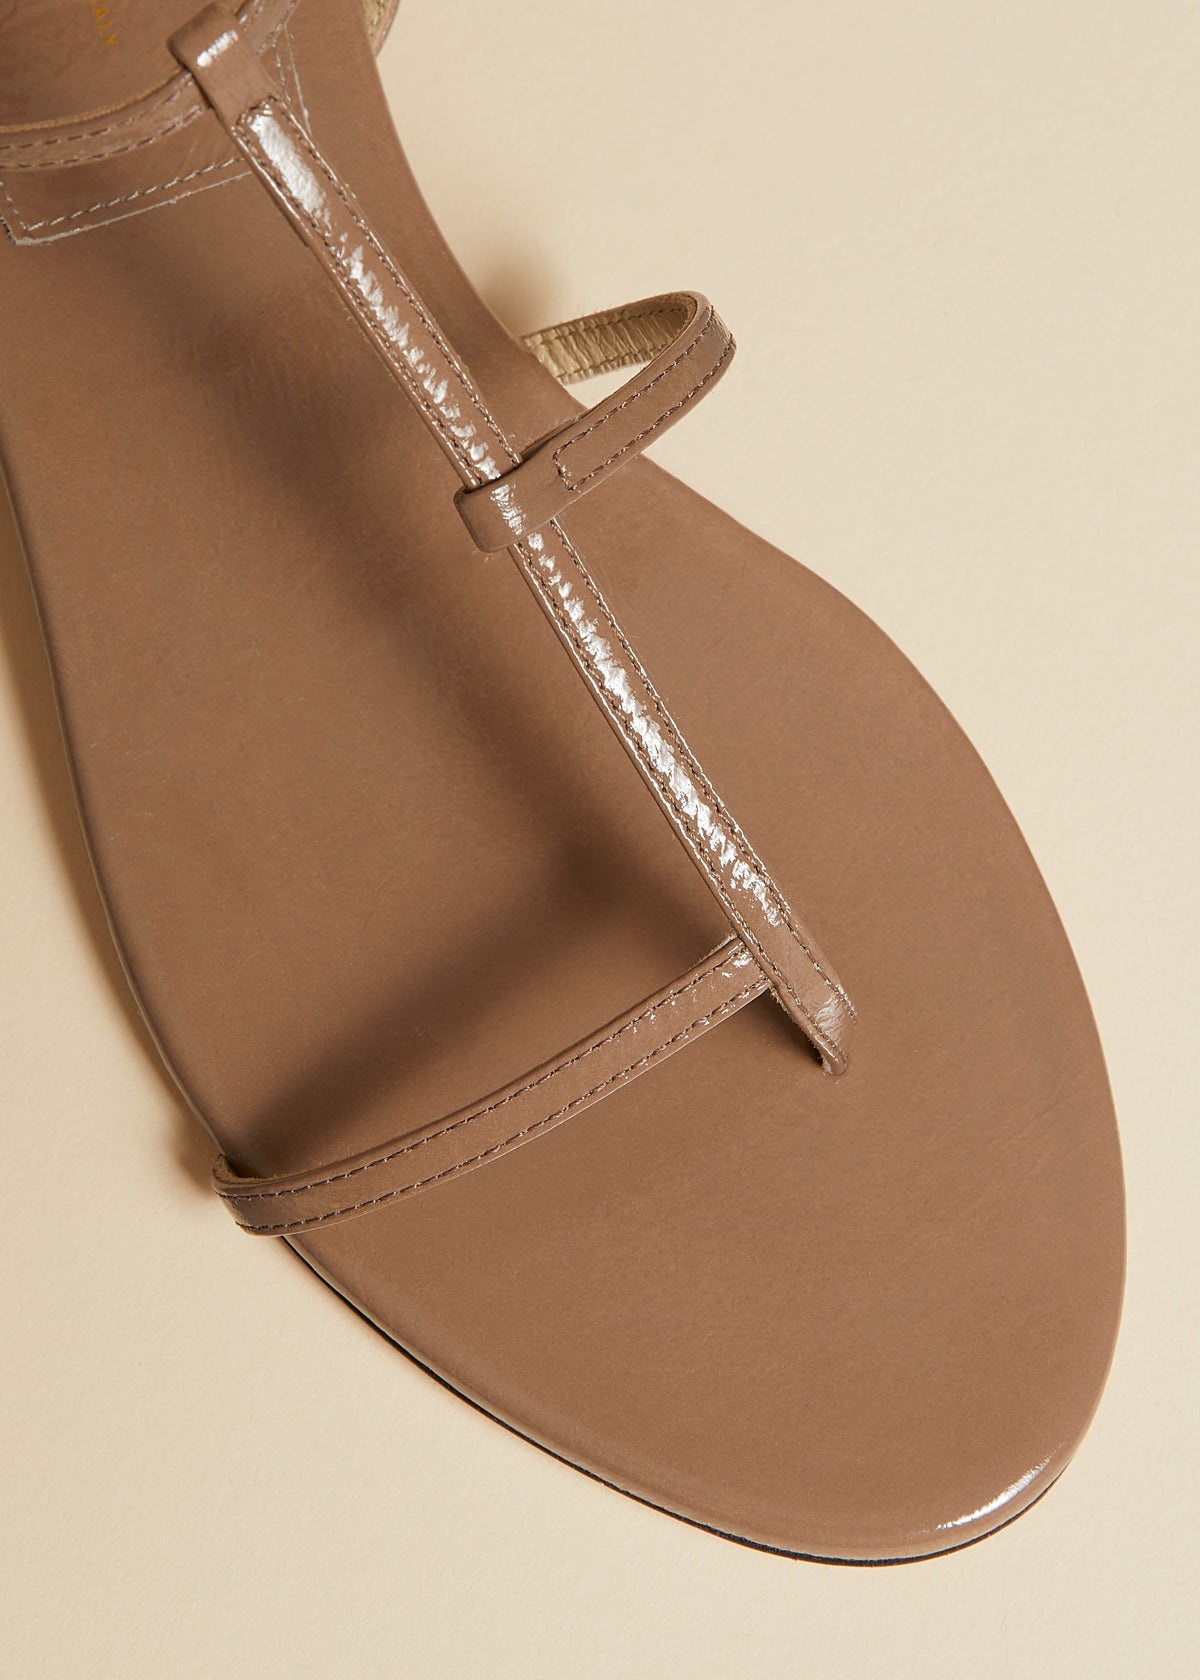 The Jones Flat Sandal in Mud Crinkled Leather - 4